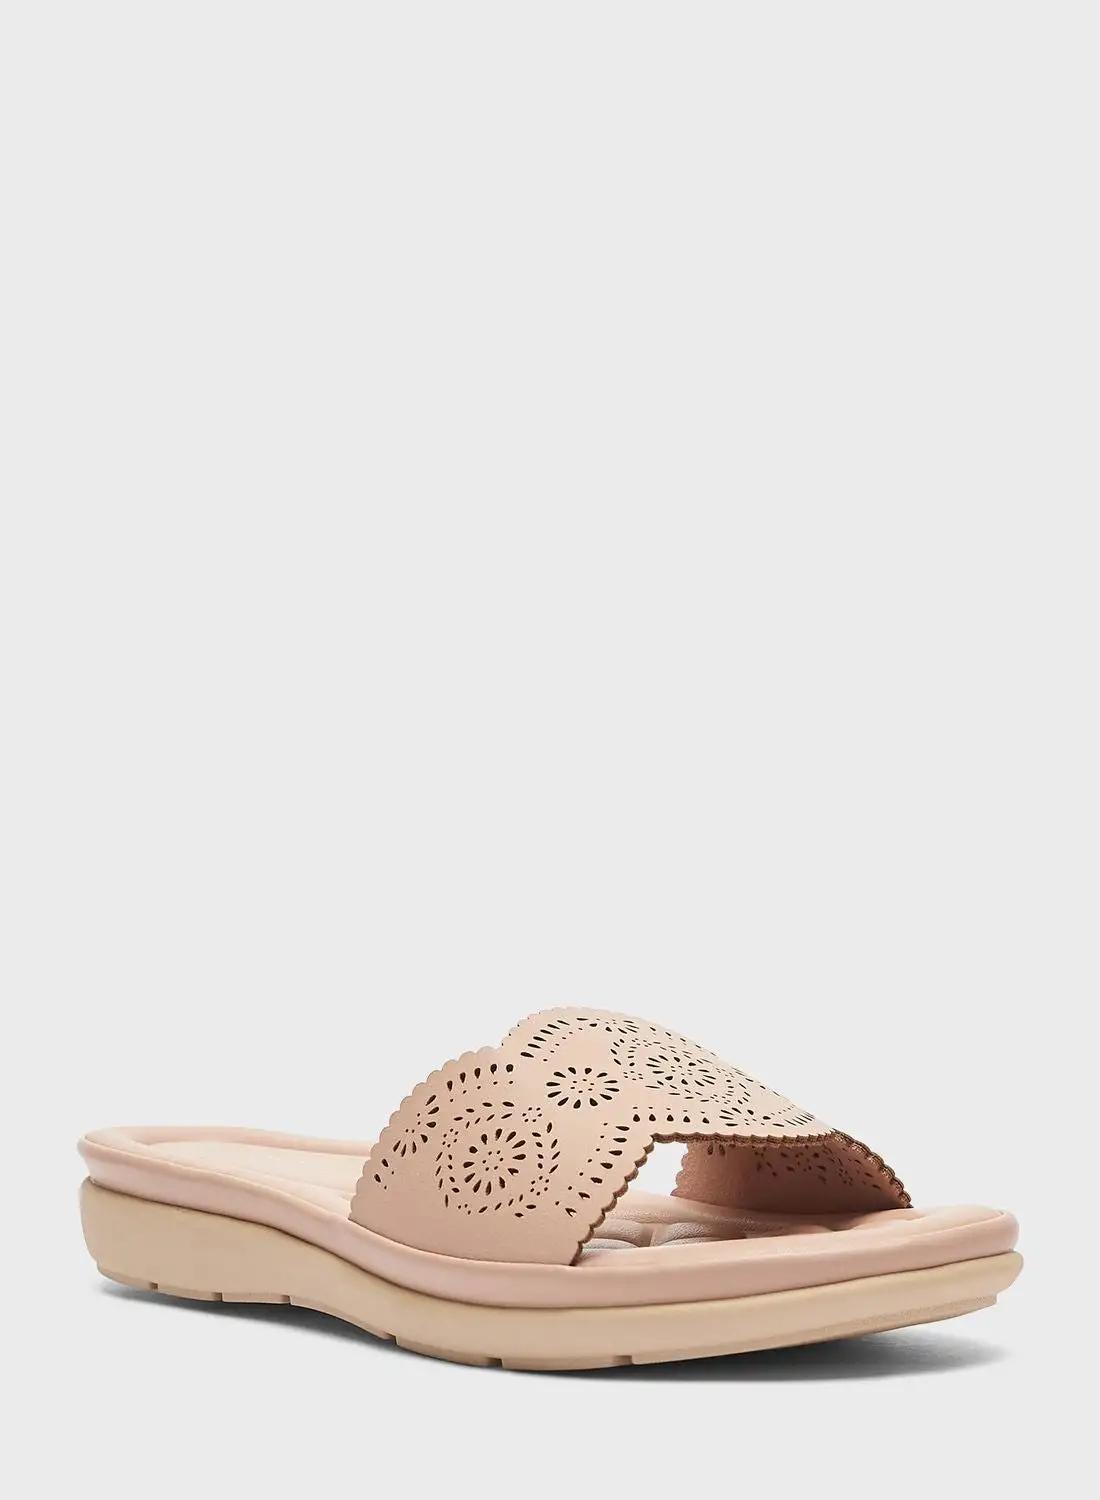 Le Confort Casual Flat Sandals